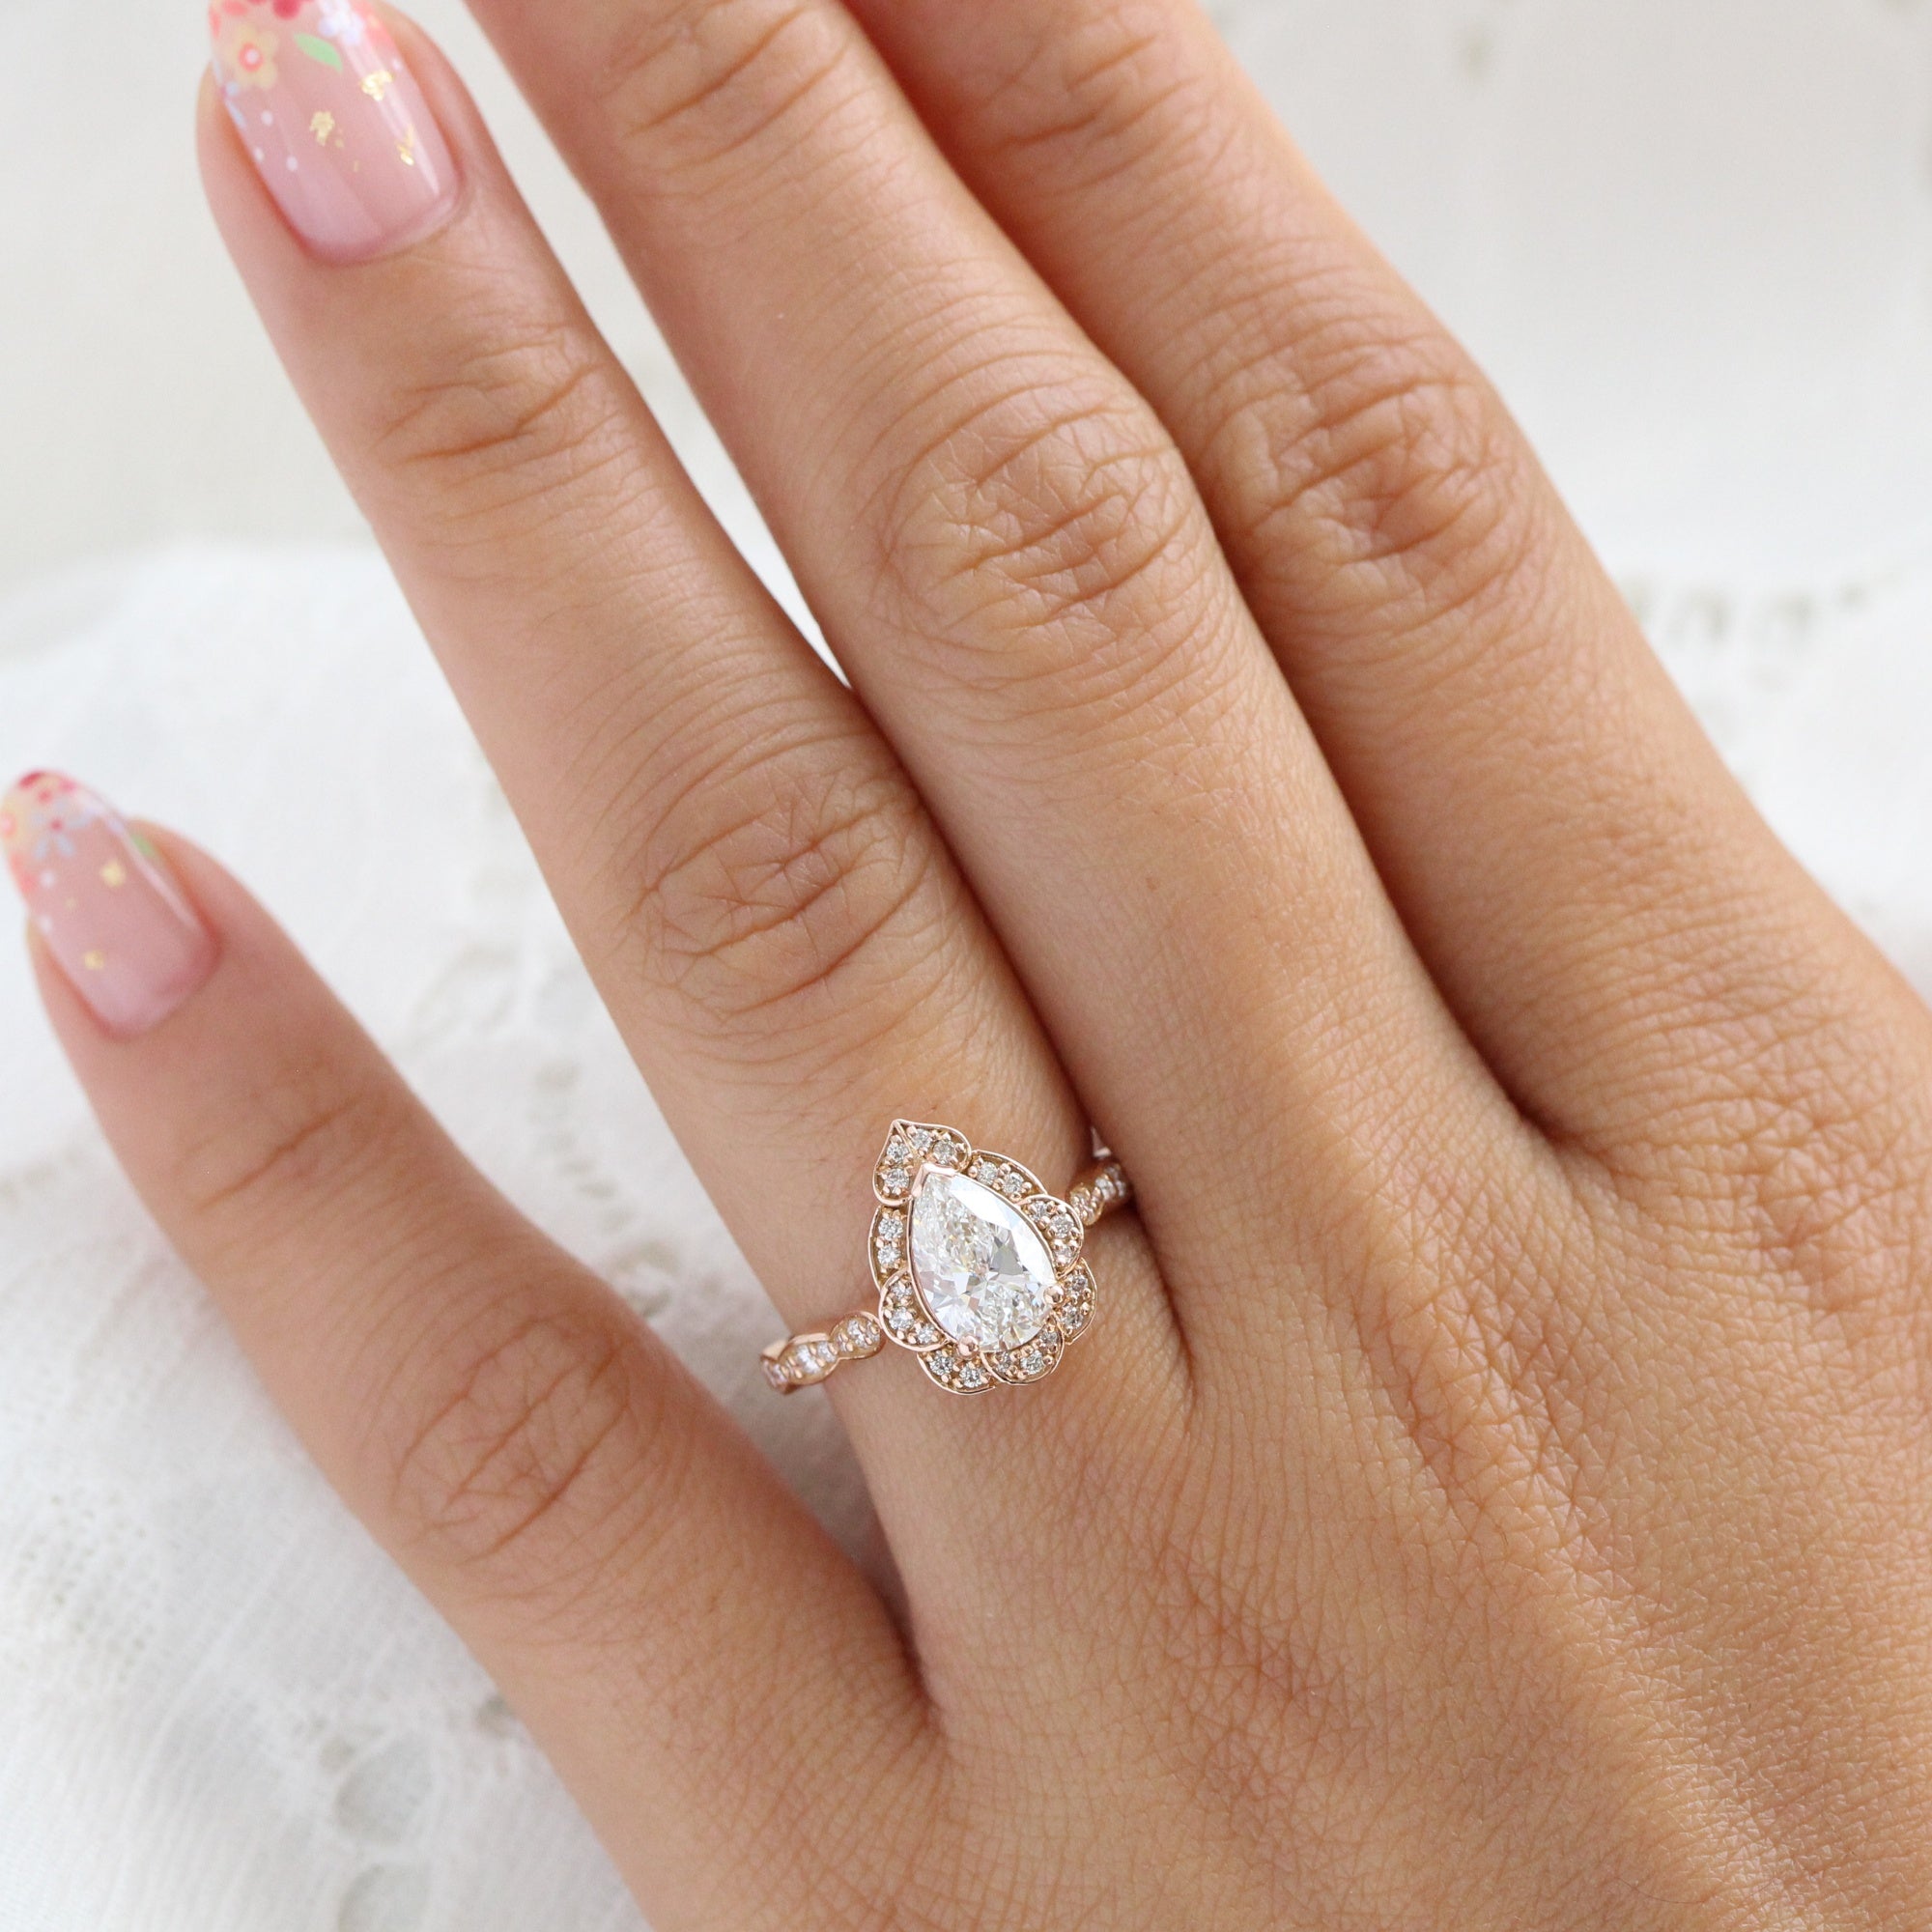 lab diamond ring rose gold vintage halo pear diamond engagement ring La More Design Jewelry